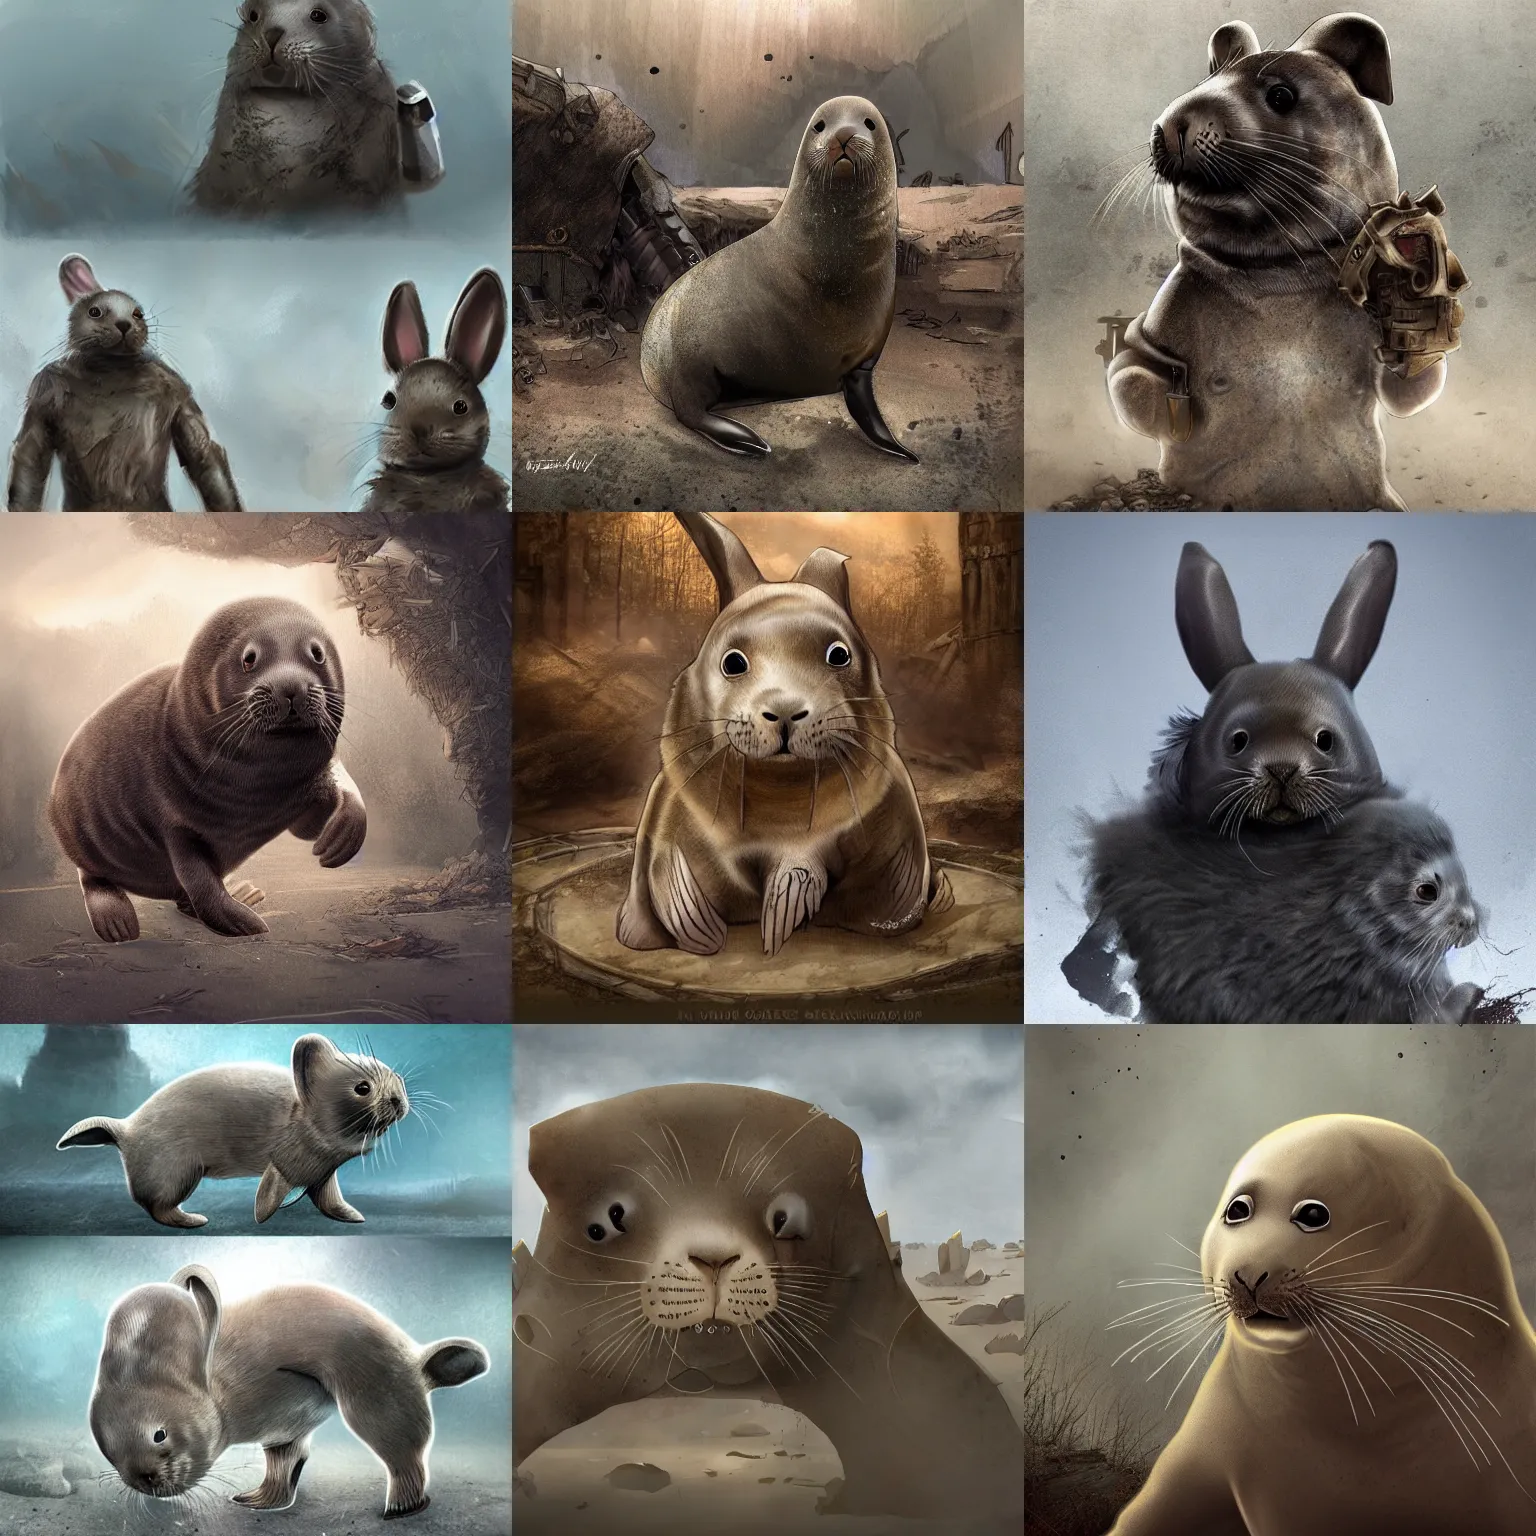 Prompt: seal bunny chimera, post apocalyptic, award winning digital art, featured on artstation